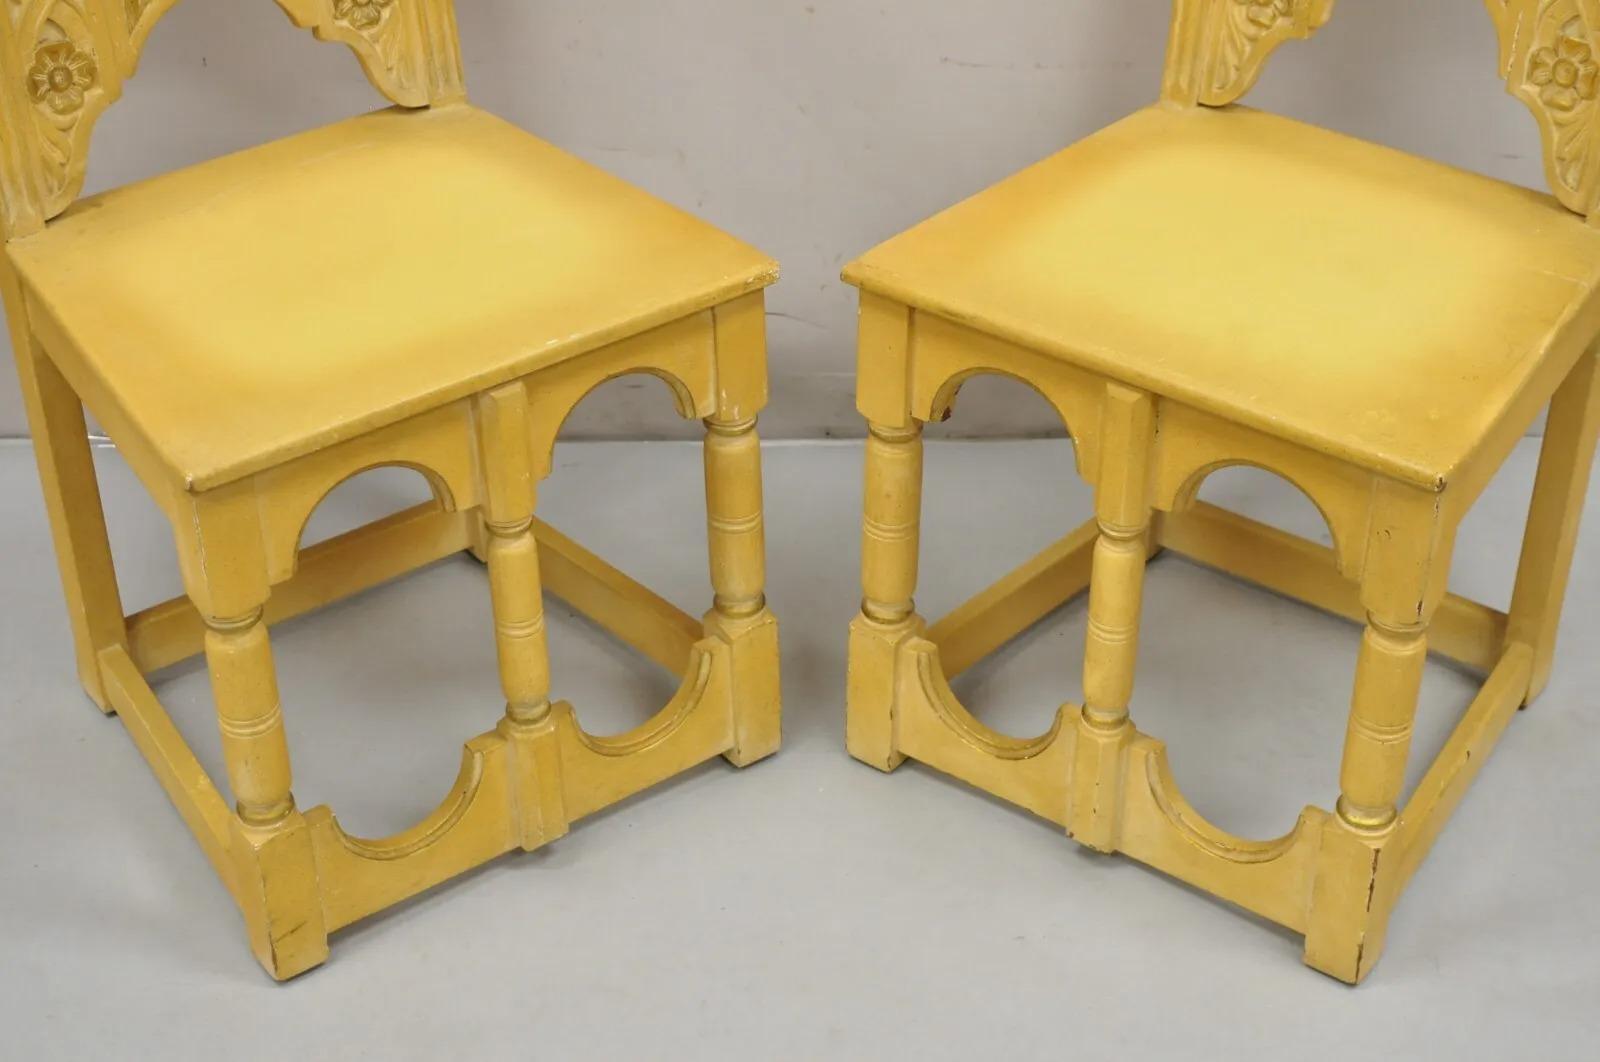 Gothic Renaissance Revival Painted Hall Altar Console Table Chair Set - 4 Pc Set For Sale 7